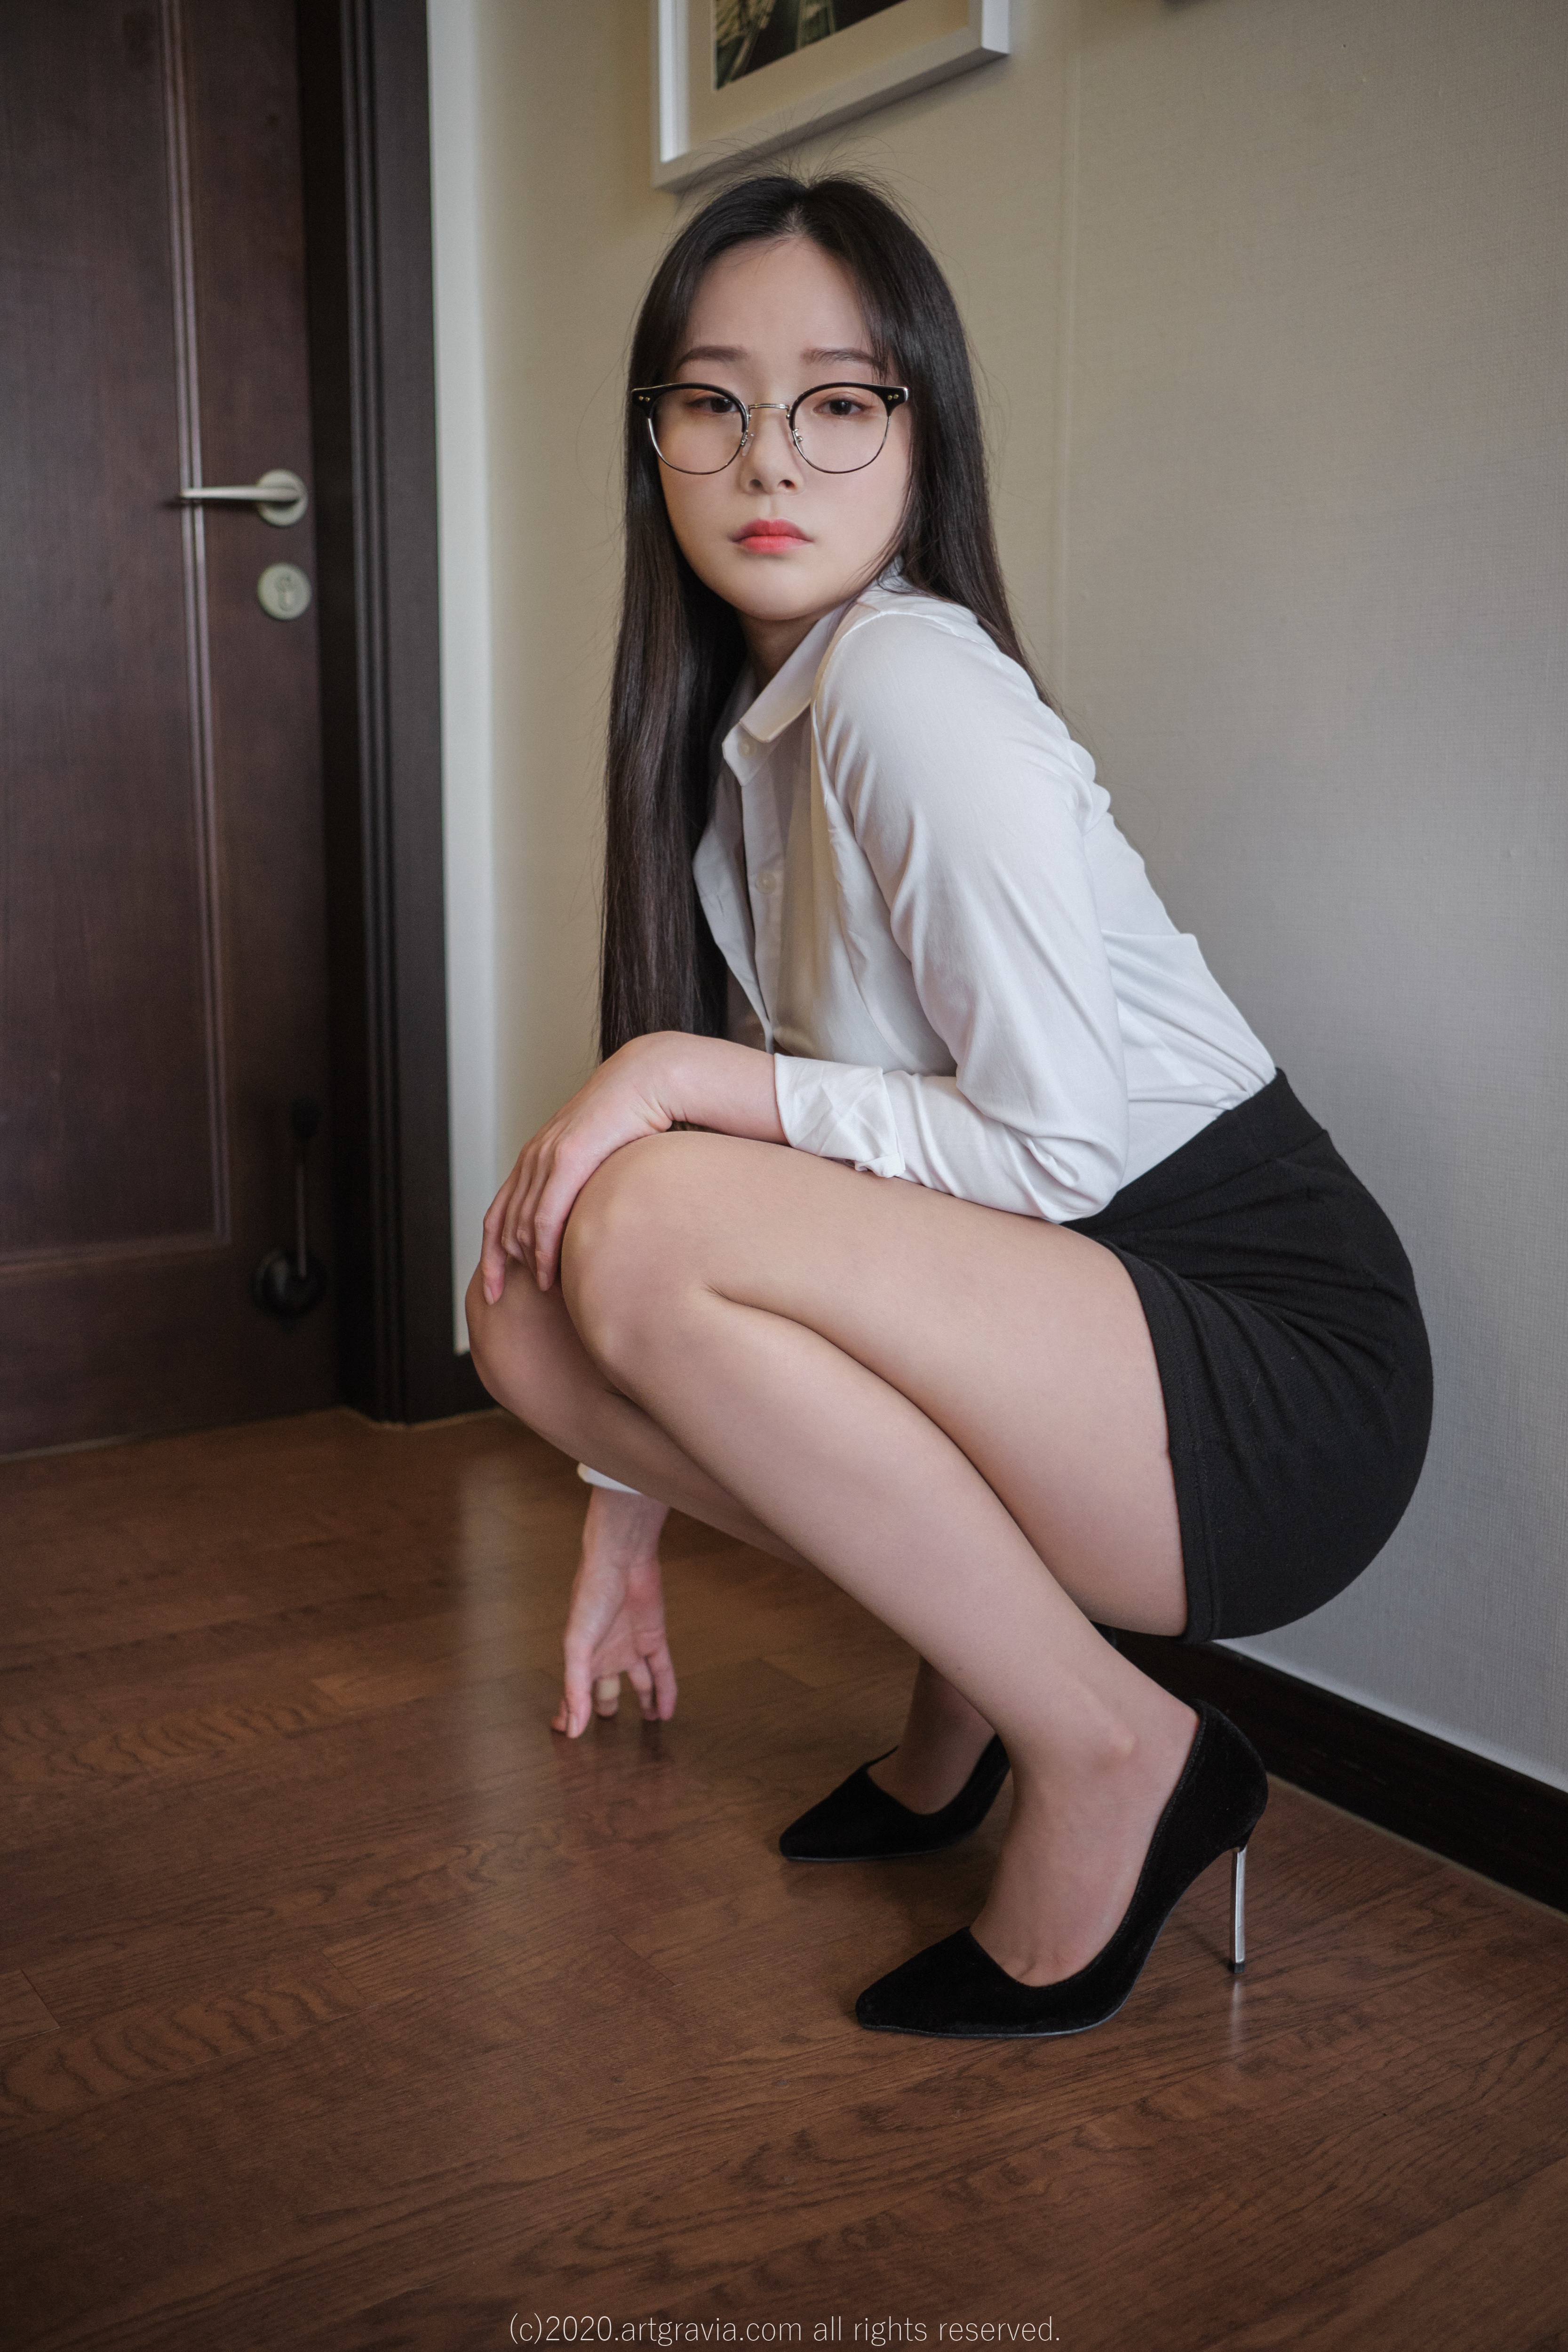 People 3333x5000 Pia Korean women Asian women curvy sensual gaze women indoors indoors high heels pale office girl